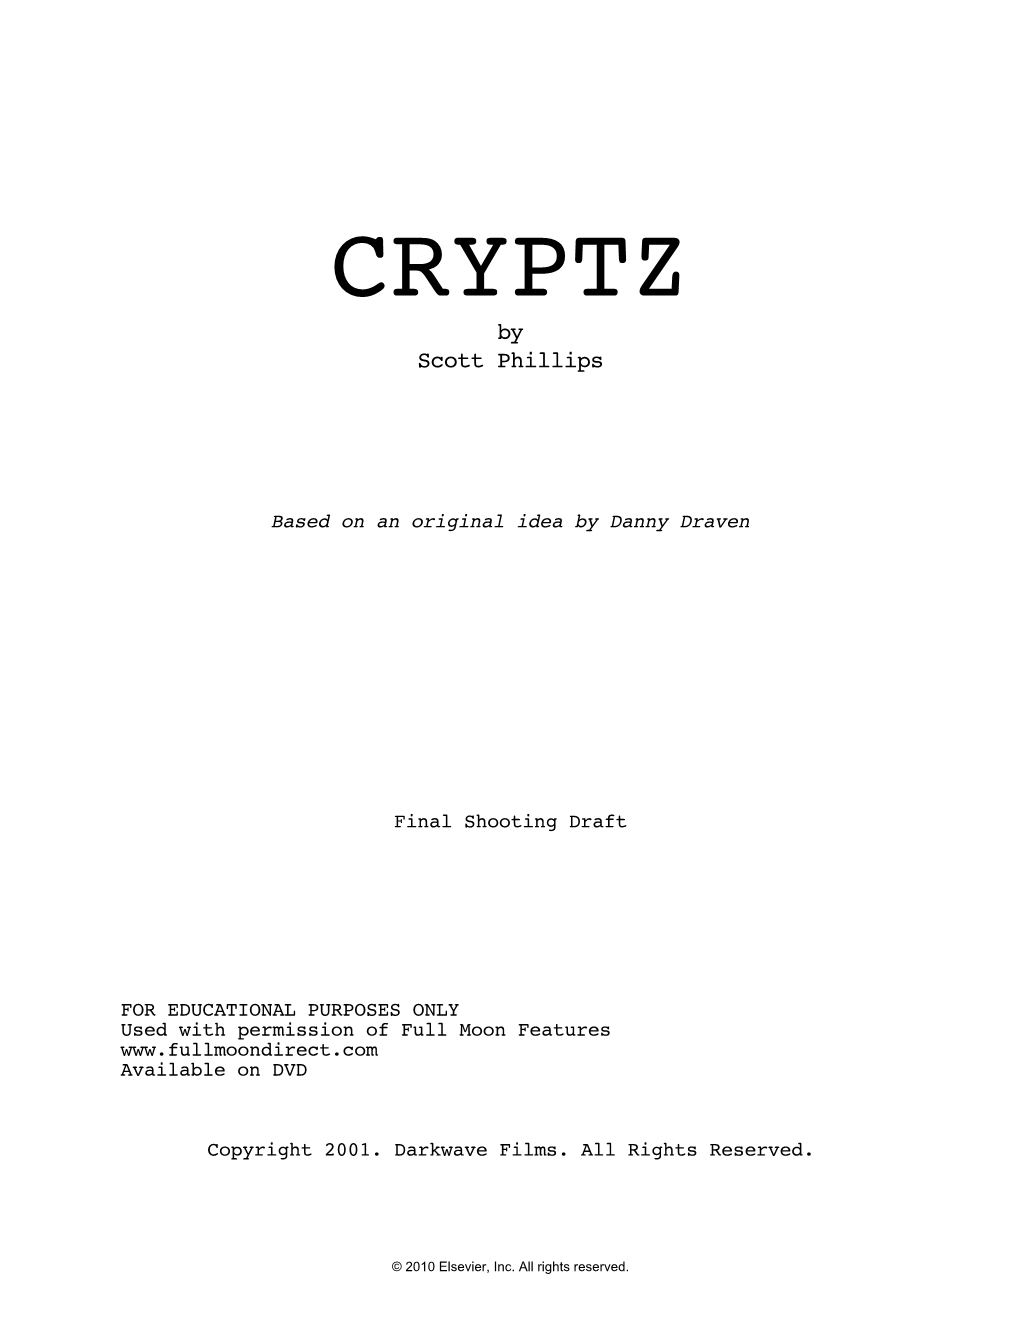 CRYPTZ by Scott Phillips